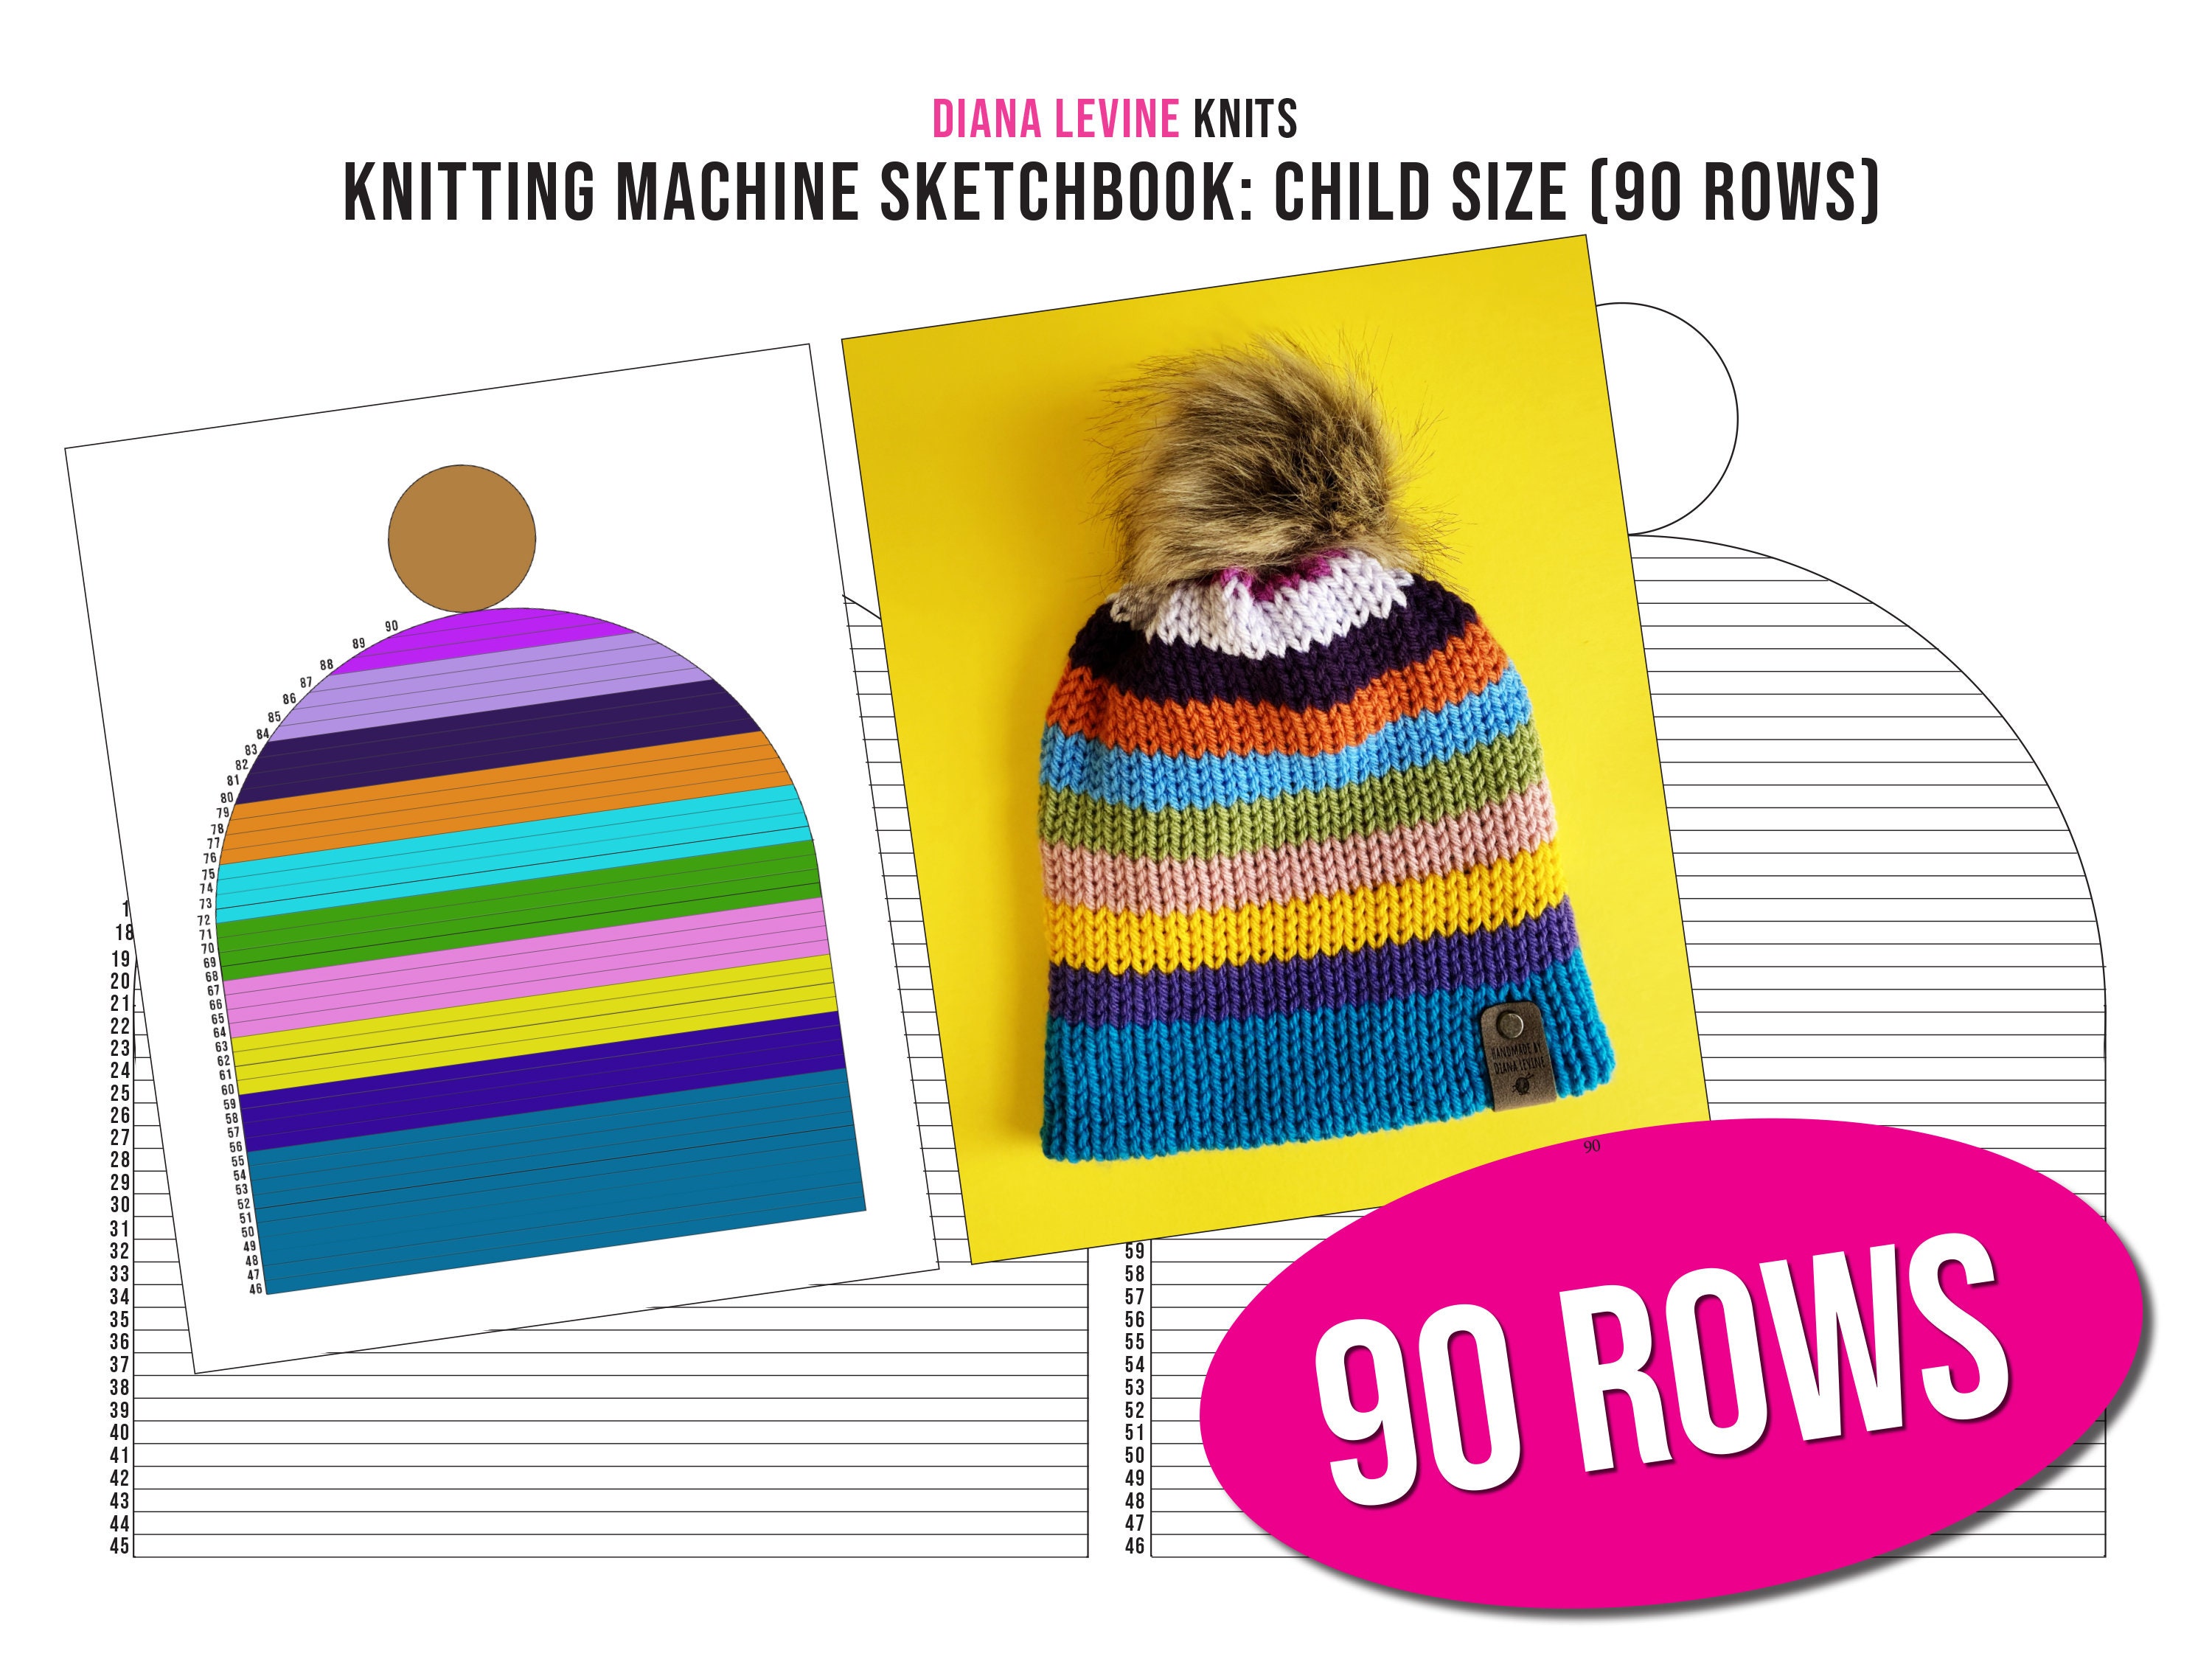 SENTRO Knitting Machine  Hi all I want to do a baby hat on my 40 needle  how many rounds do I do please 😊